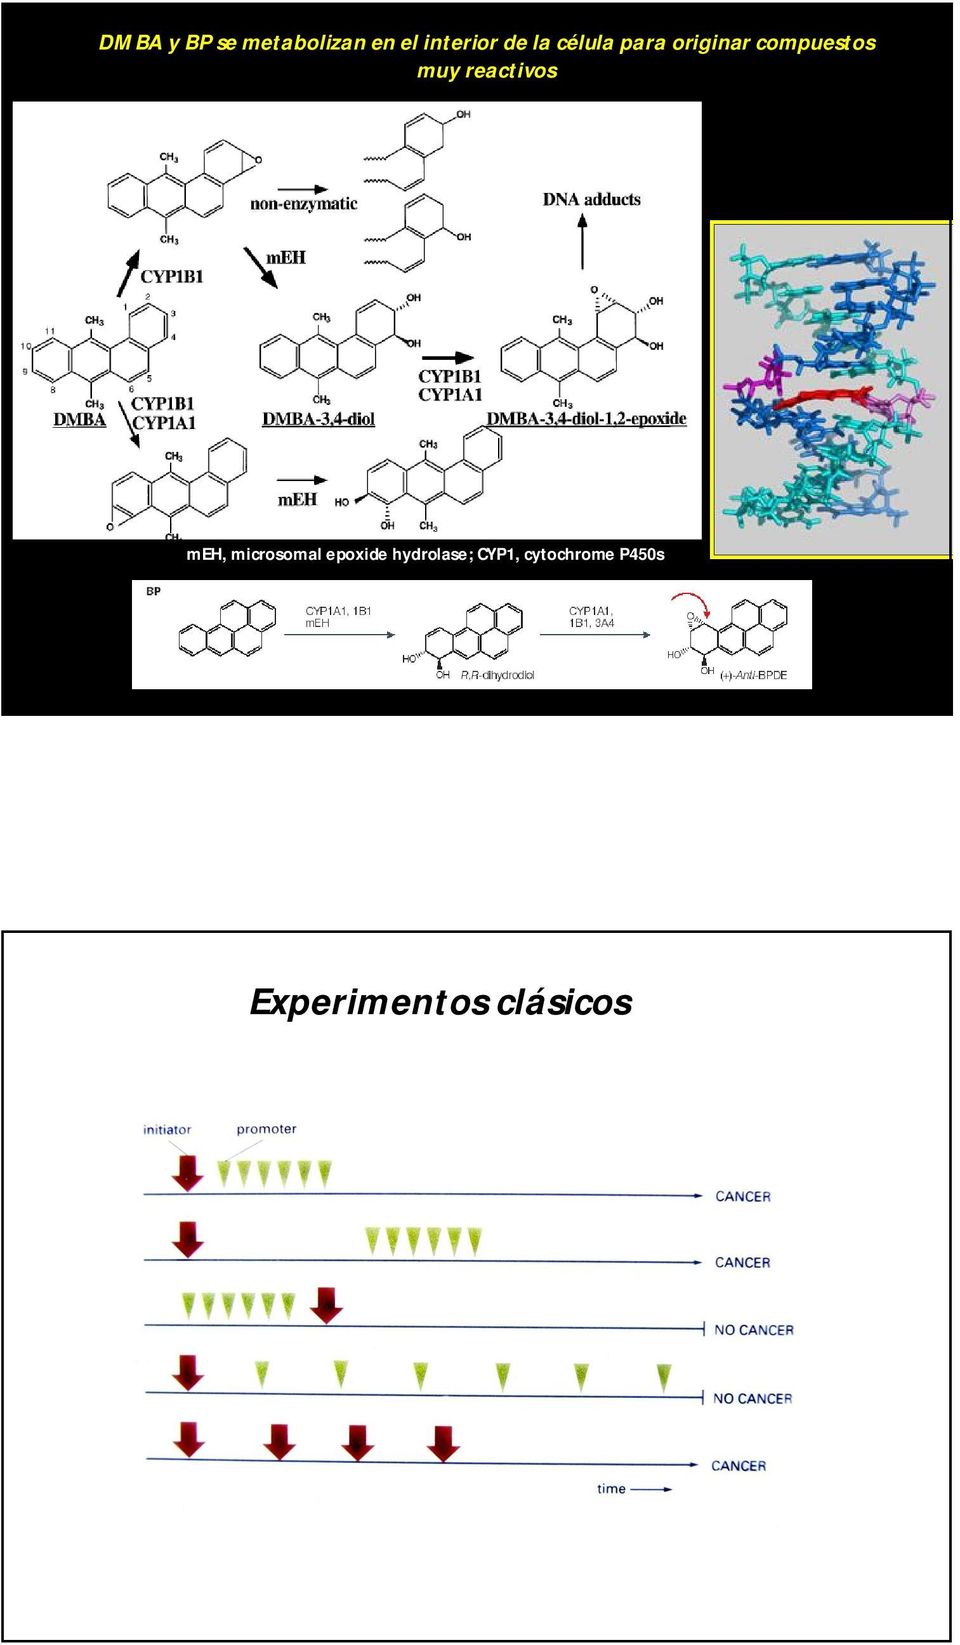 reactivos meh, microsomal epoxide